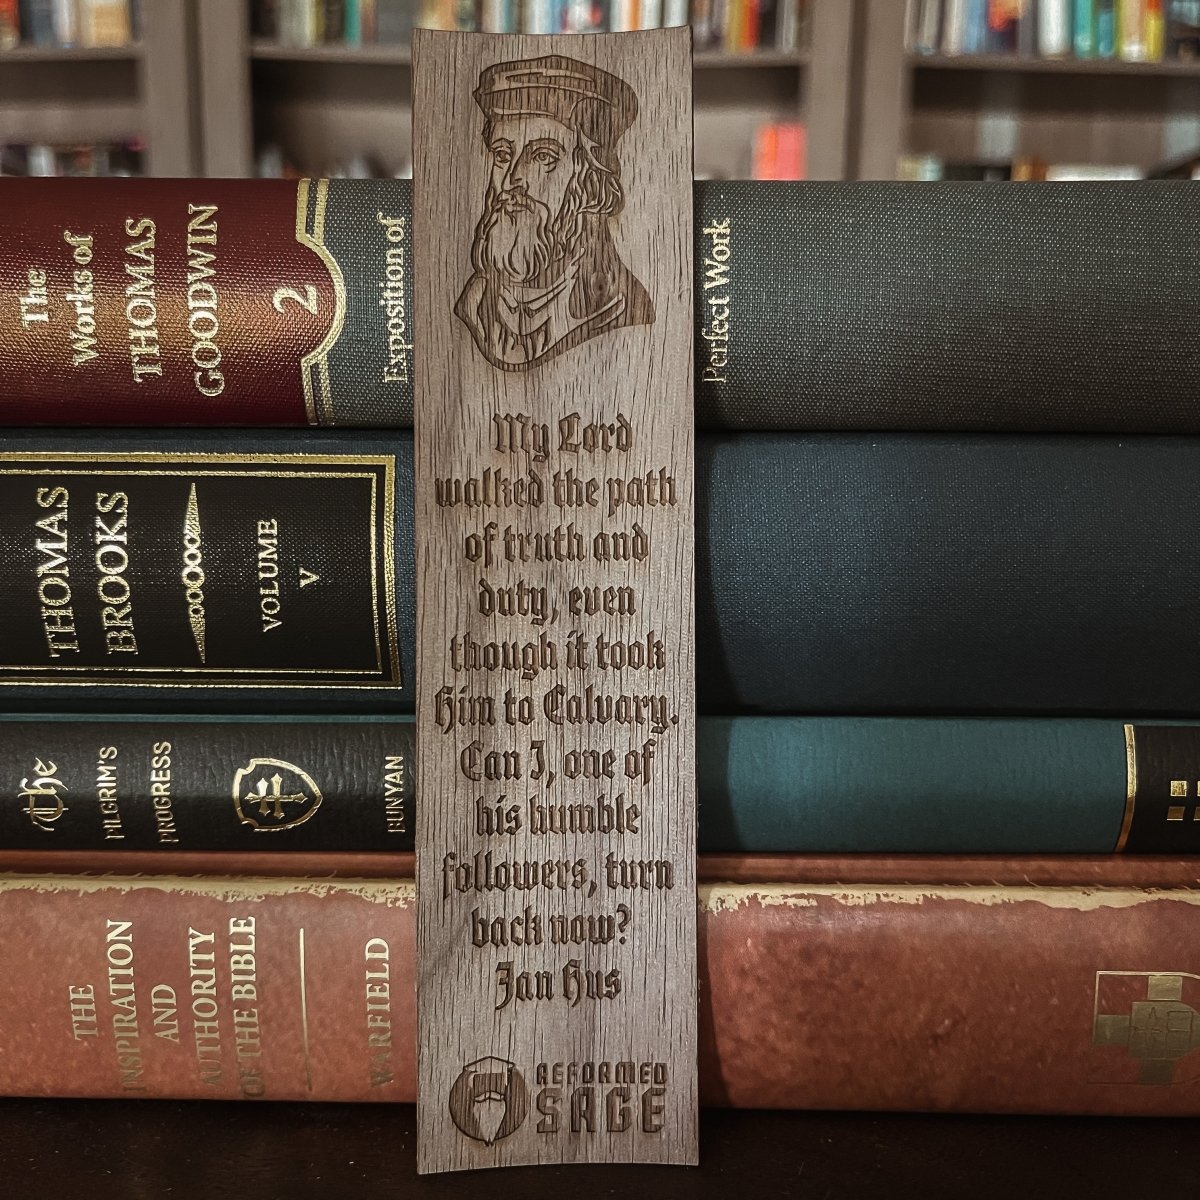 CHRISTIAN BOOKMARKS - Jan Hus - Bookmark - The Reformed Sage - #reformed# - #reformed_gifts# - #christian_gifts#